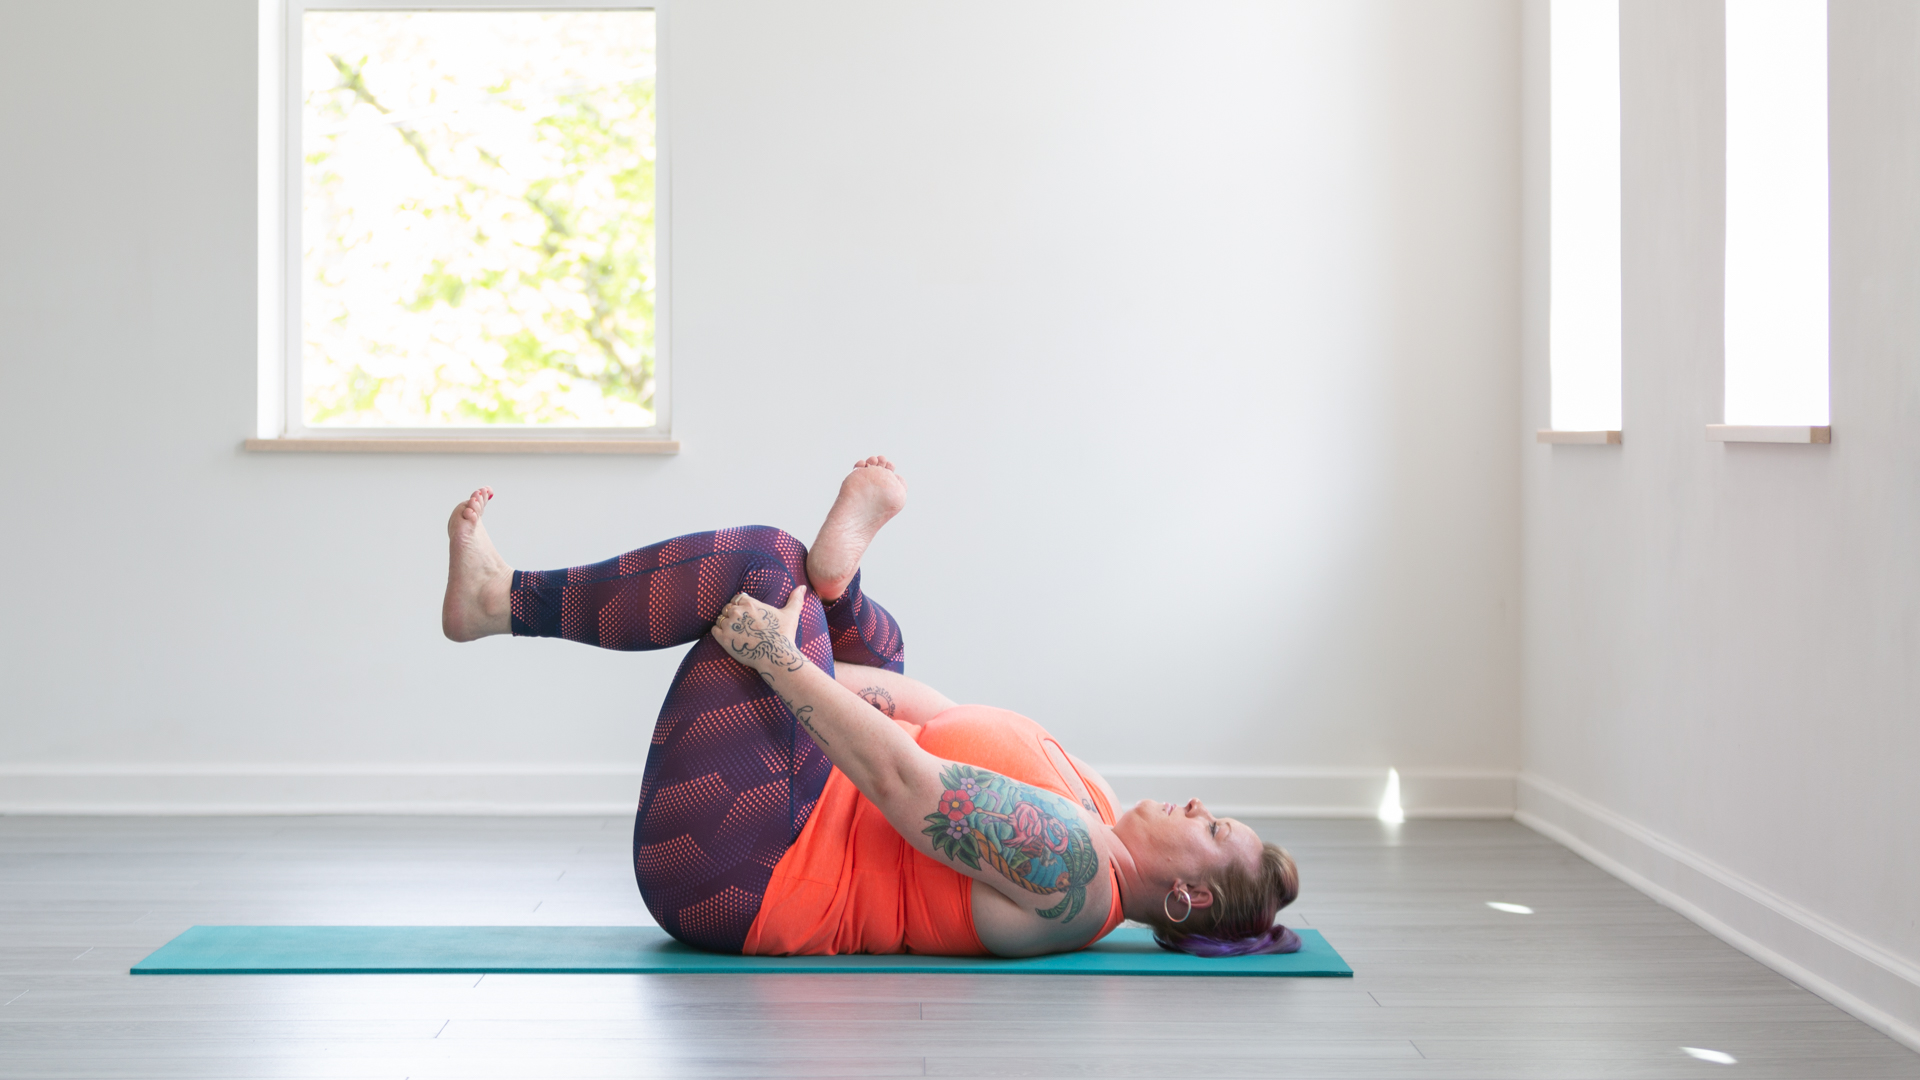 Yoga poses to improve your body awareness | CNN